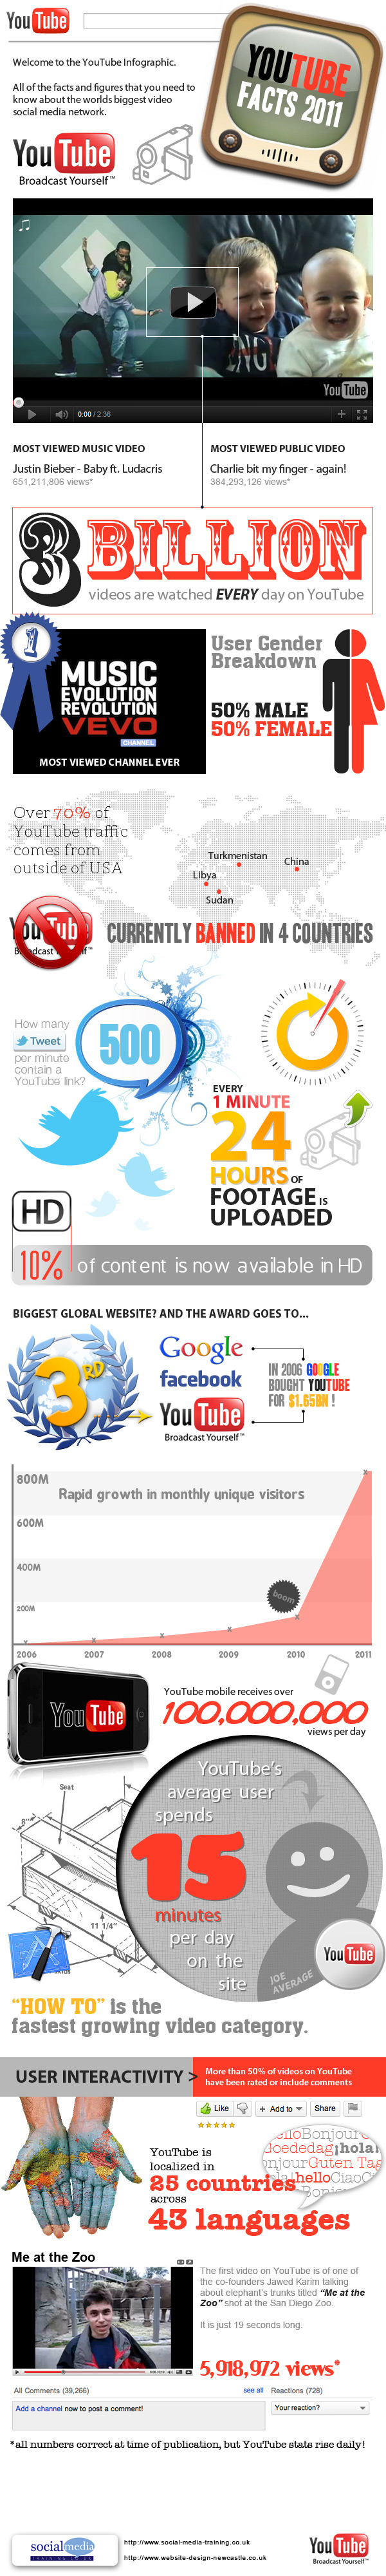 youtube infographic